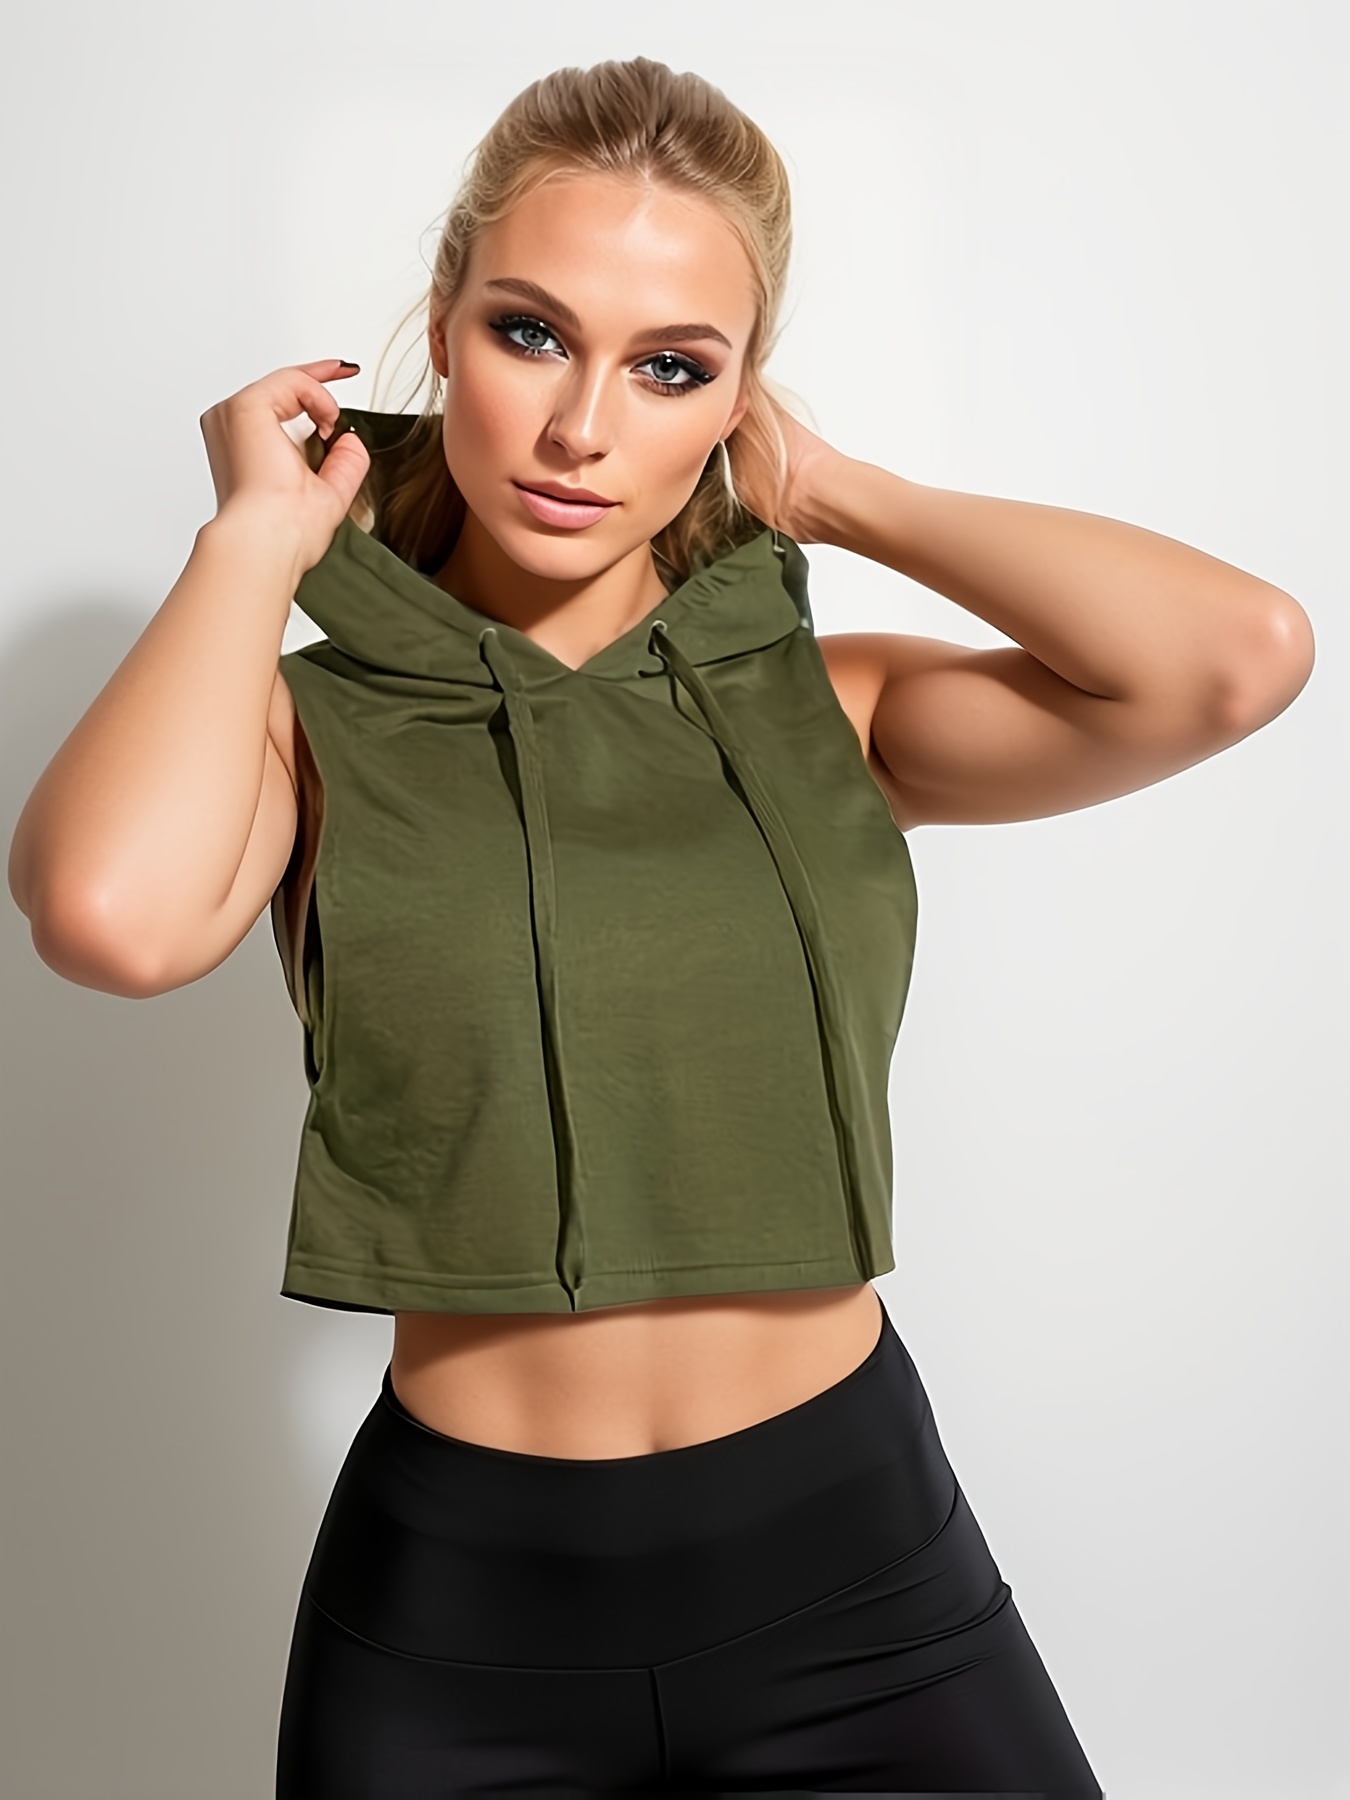 Sleeveless Women Sport Shirts Loose Fit Yoga Running Fitness Crop Top Tank  Top